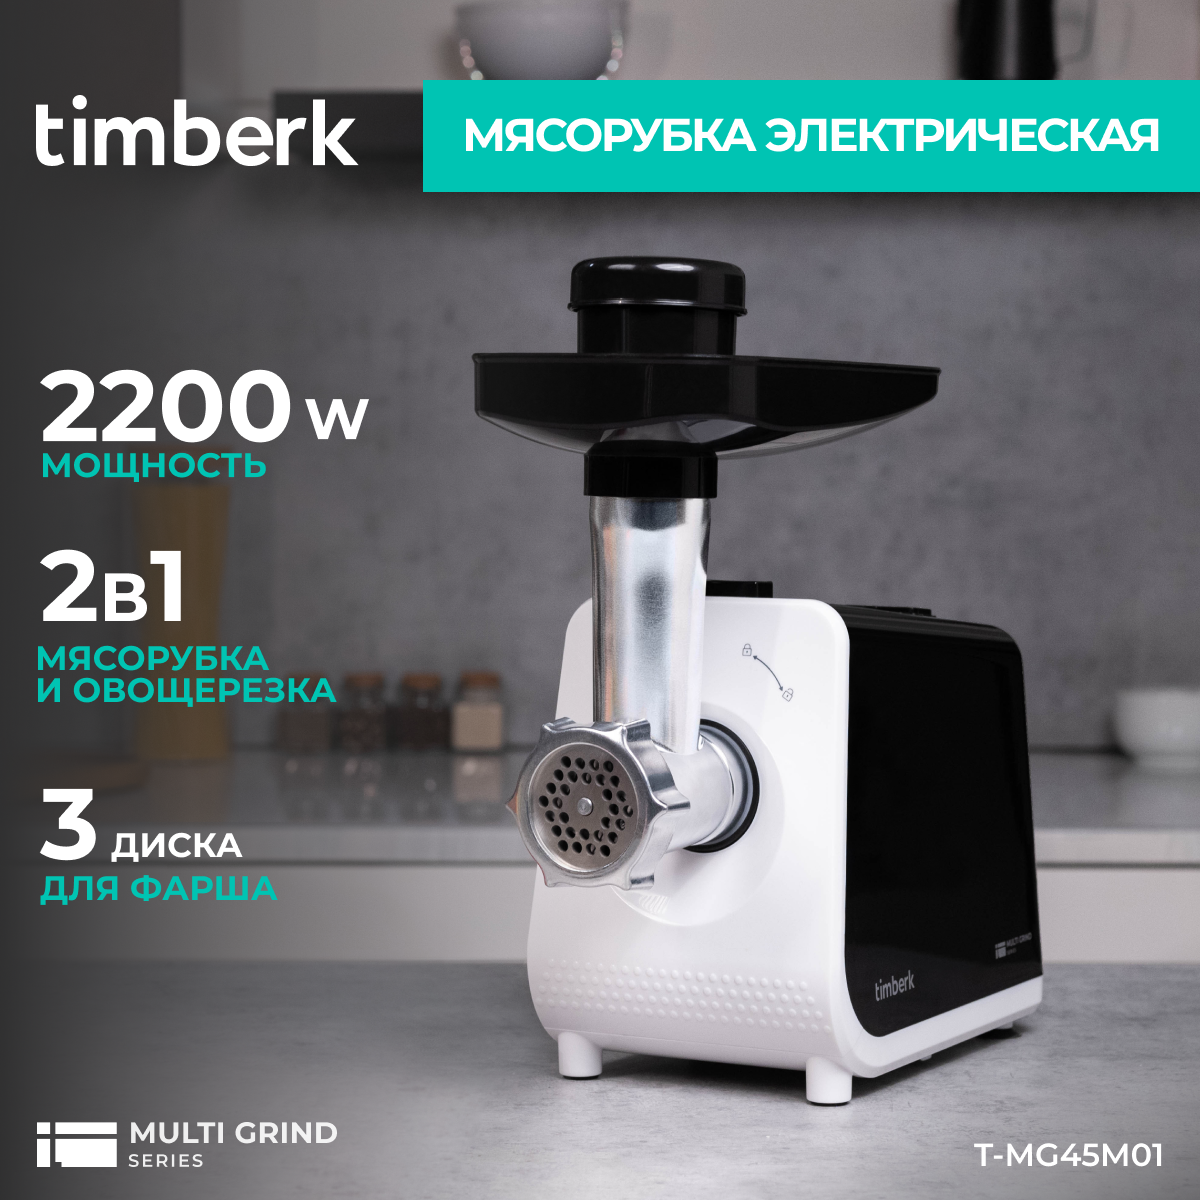 Электромясорубка Timberk T-MG45M01 450 Вт белая, черная электромясорубка timberk t mg45m03 450 вт черная